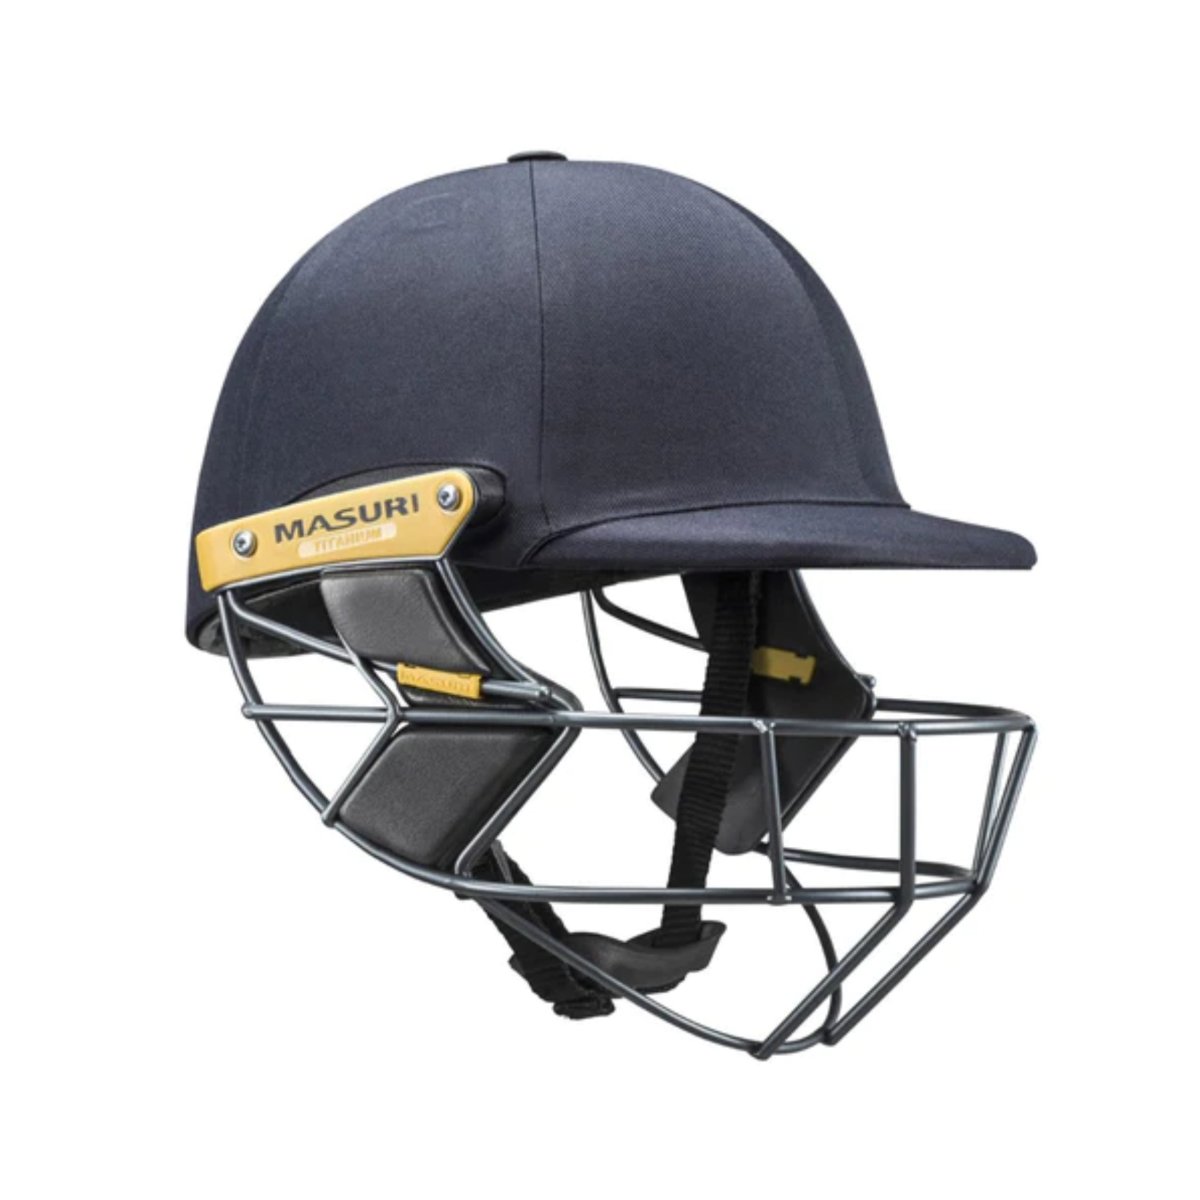 Masuri T Line Titanium Cricket Helmet - Acrux Sports